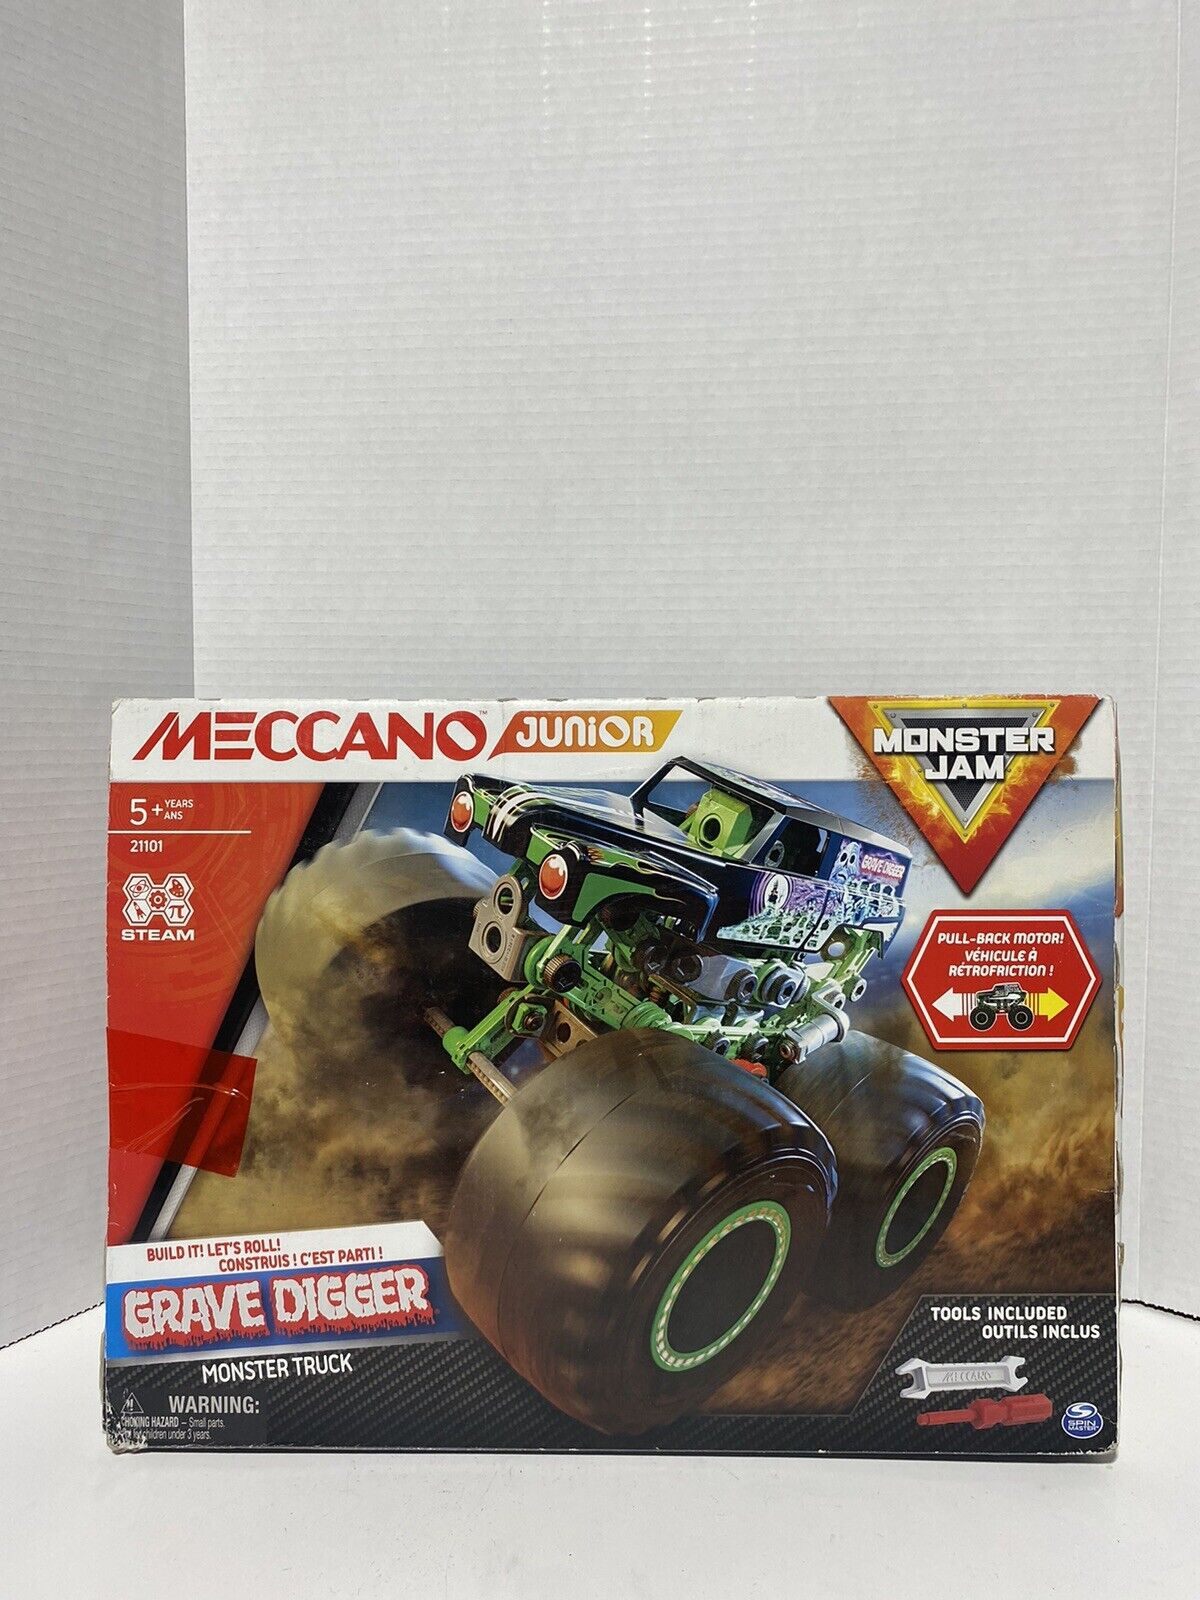 Meccano - Monster Truck Grave Digger Meccano Junior - Age 5 ans